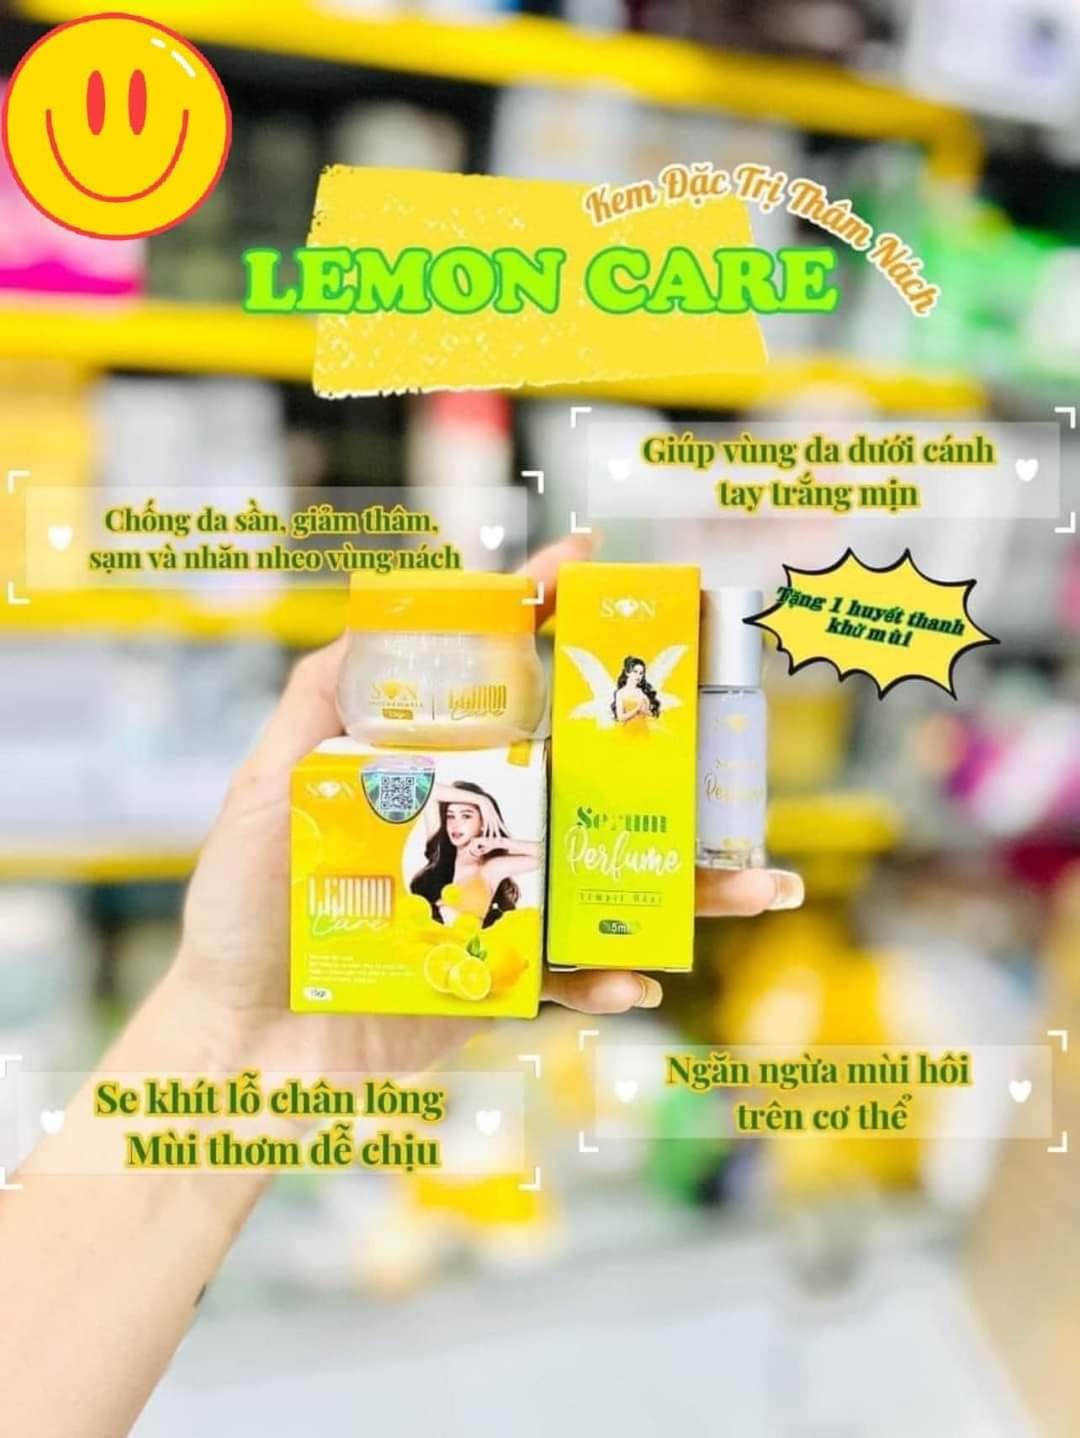 Combo 2 Hộp Kem Thâm Nách Lemon Care SON Cosmetic Tặng Serum